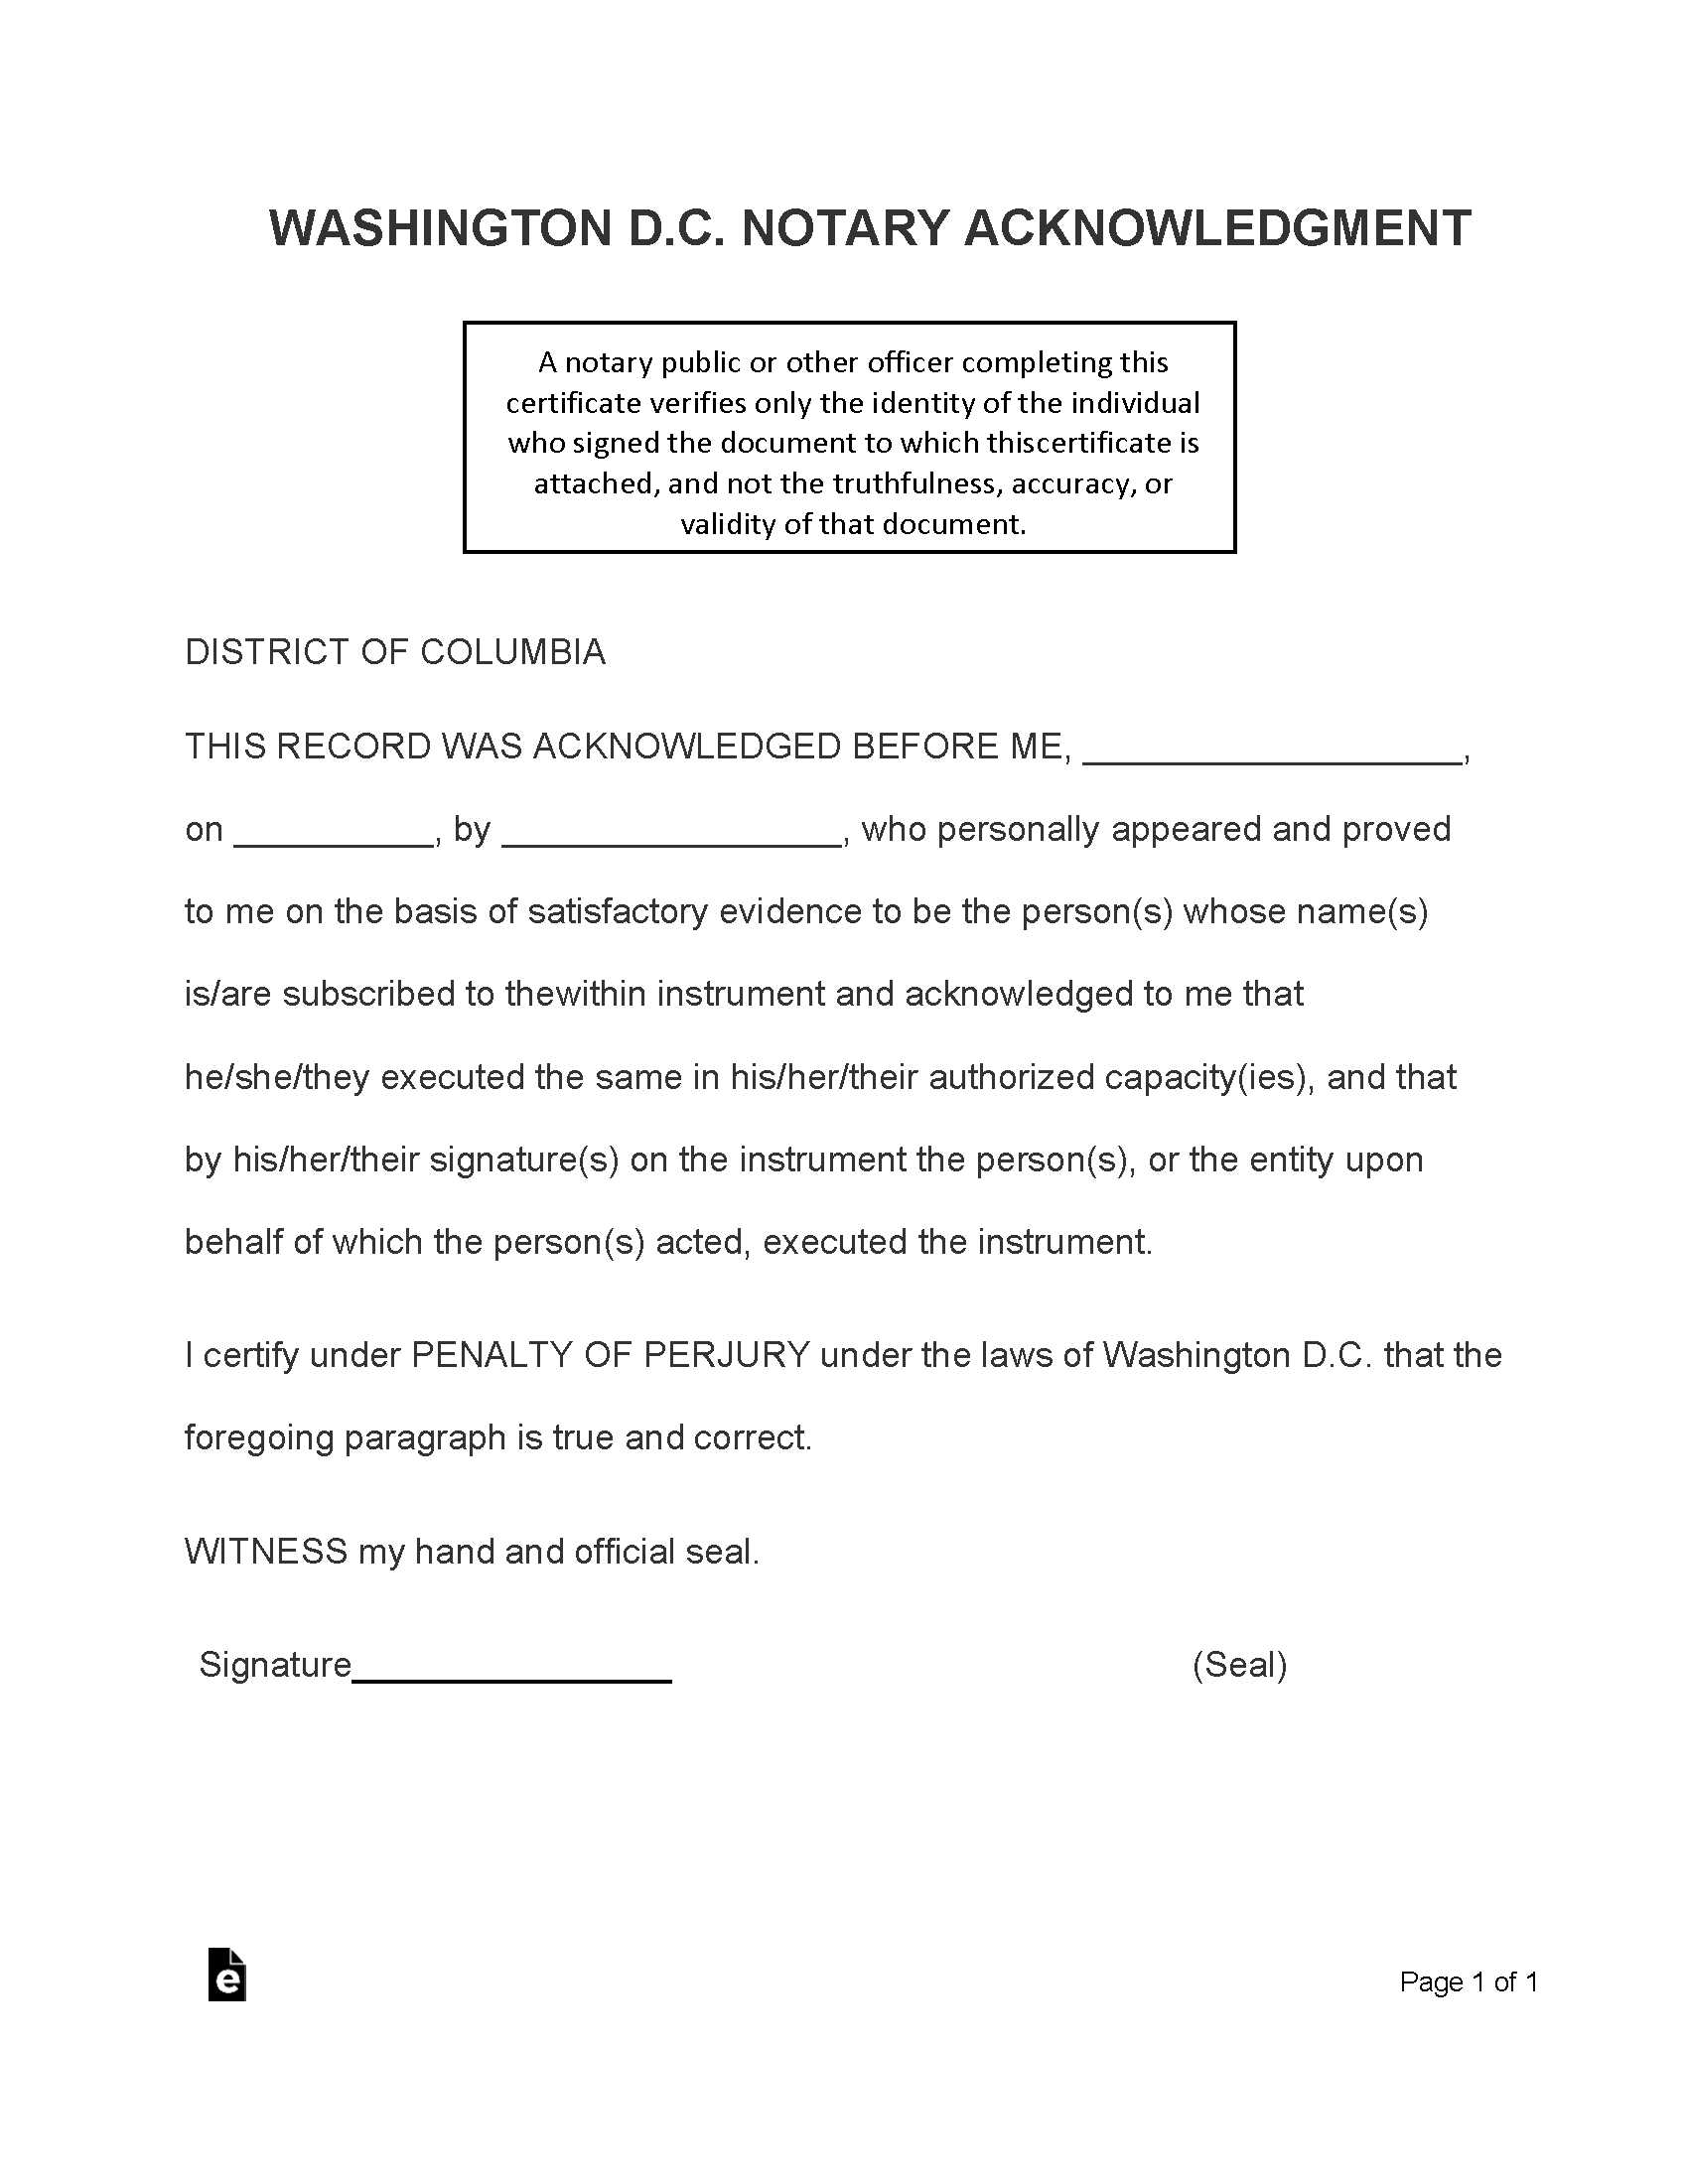 Washington D.C. Notary Acknowledgement Form